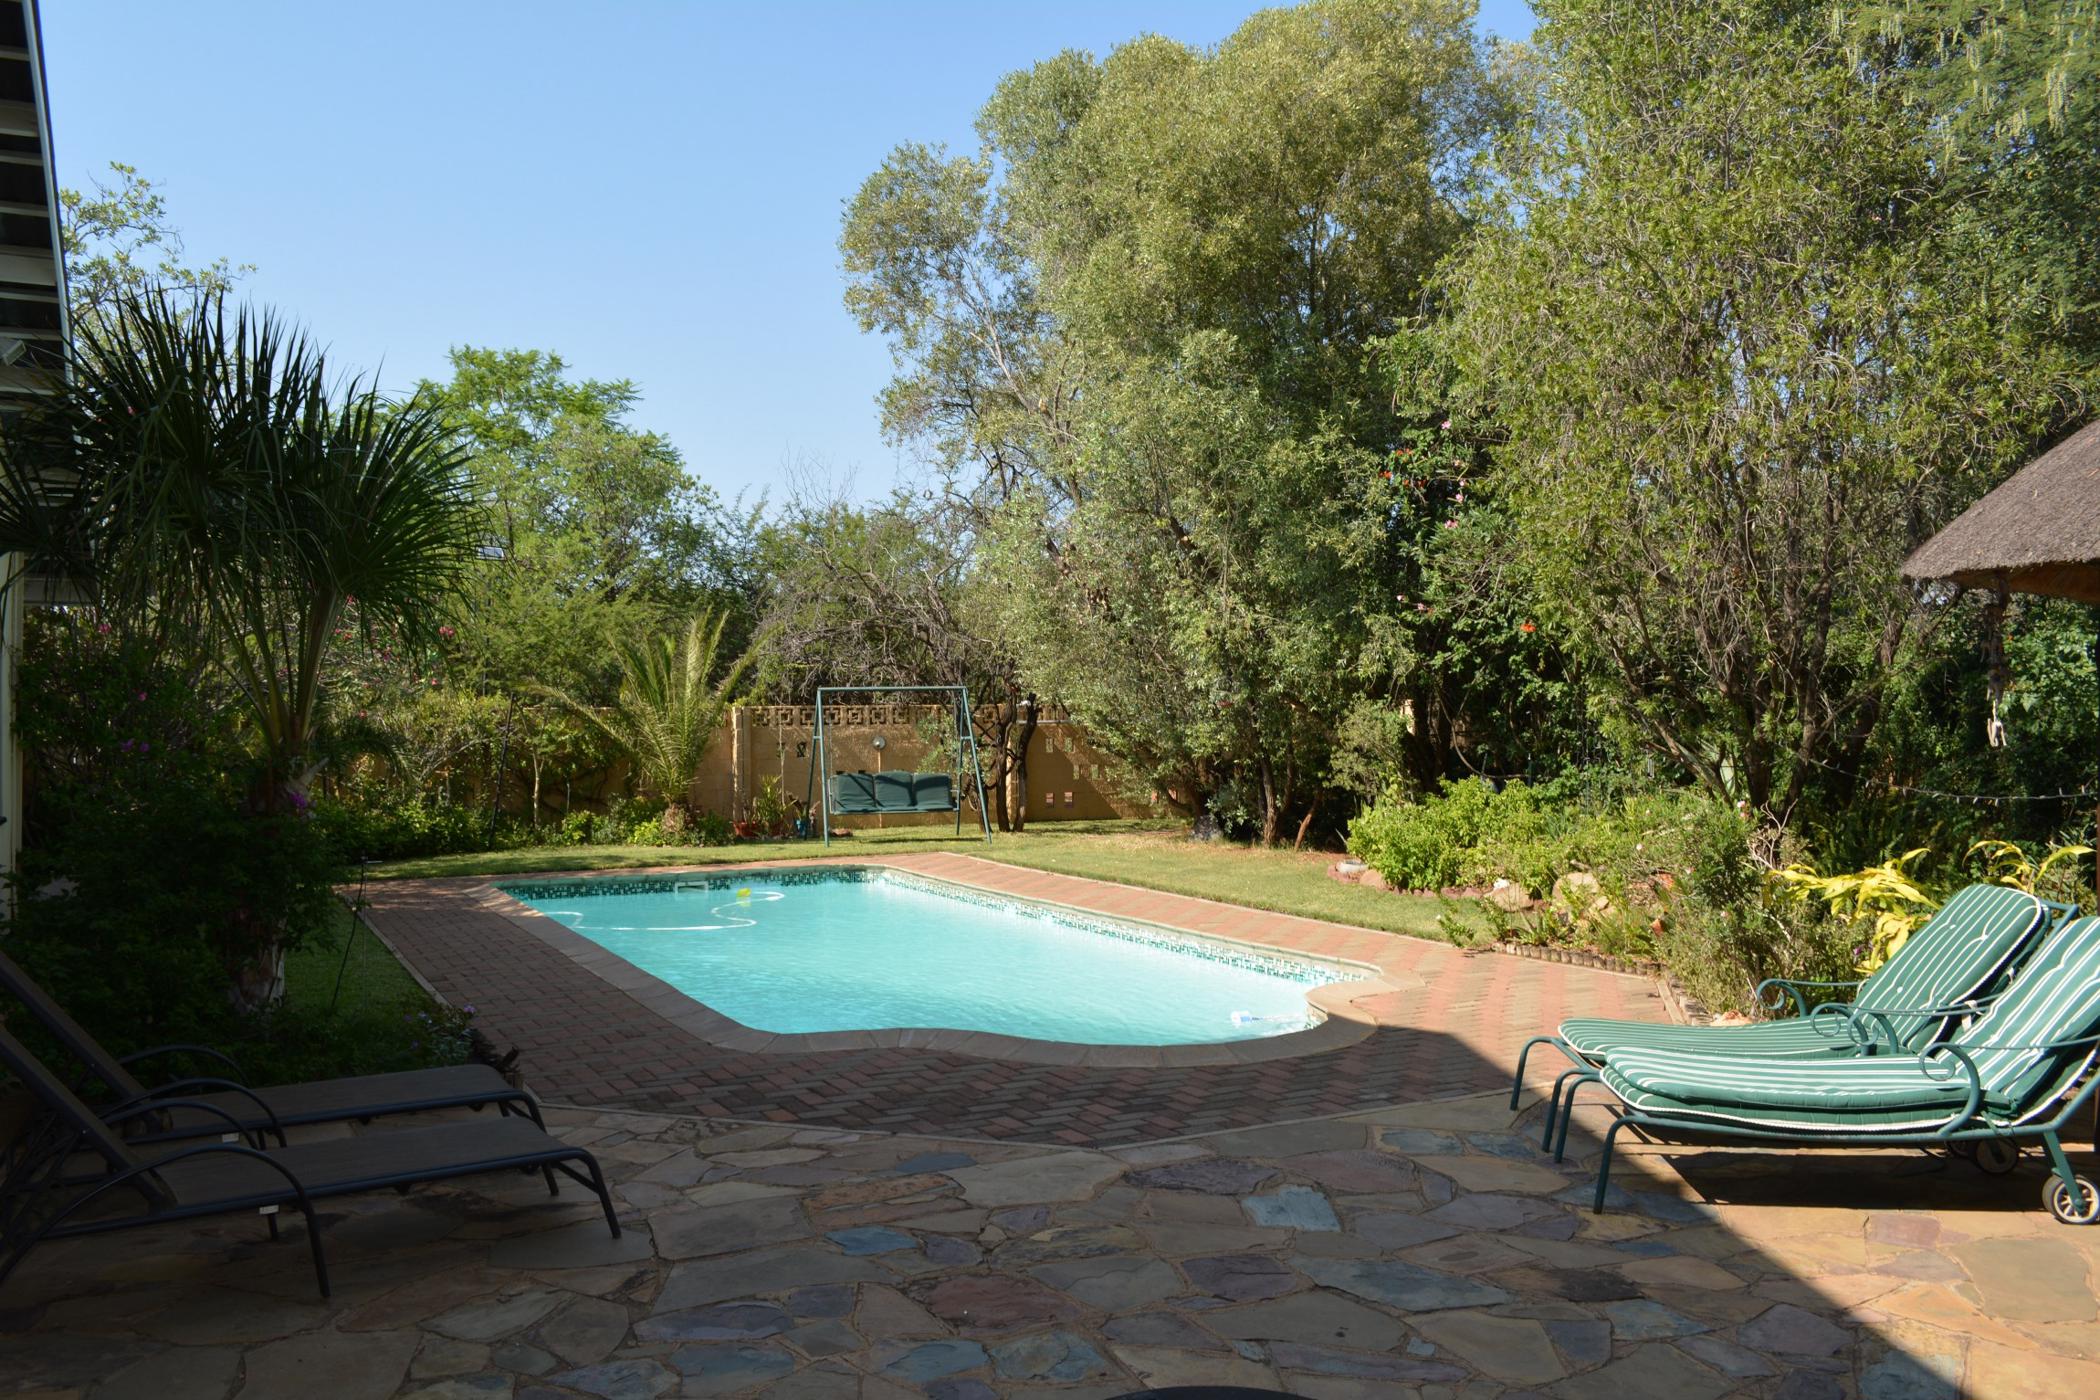 4 Bedroom House For Sale | Gaborone North (Botswana) | 3BO1432249 | Pam